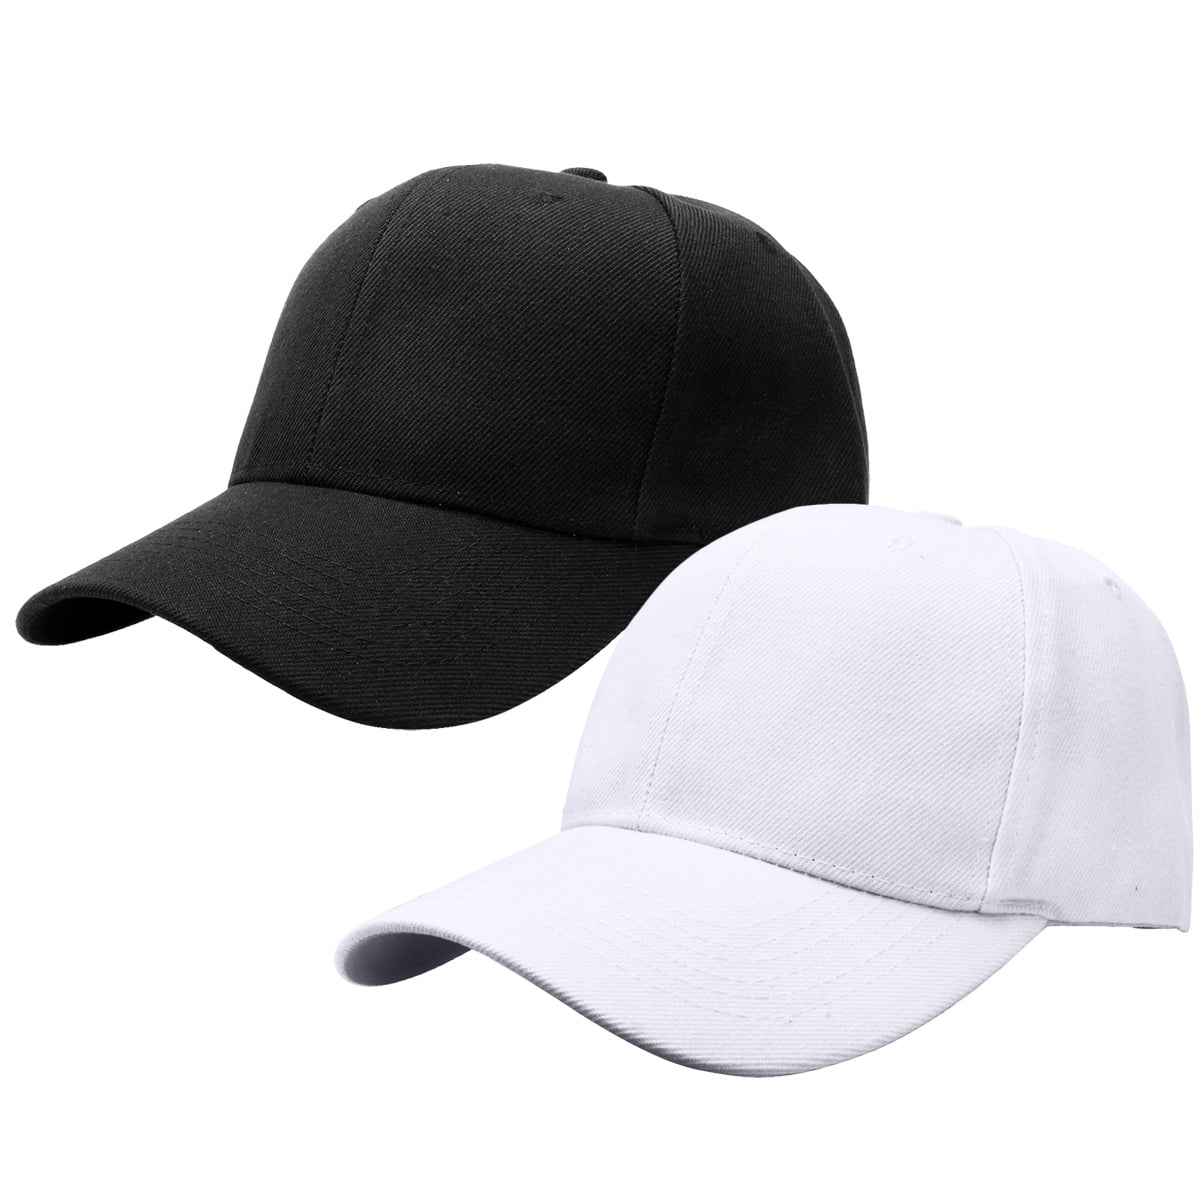 jinetor Unisex Full Mesh Baseball Cap Quick Dry Cooling Sunscreen Sports Snapback Hat Hot Pink